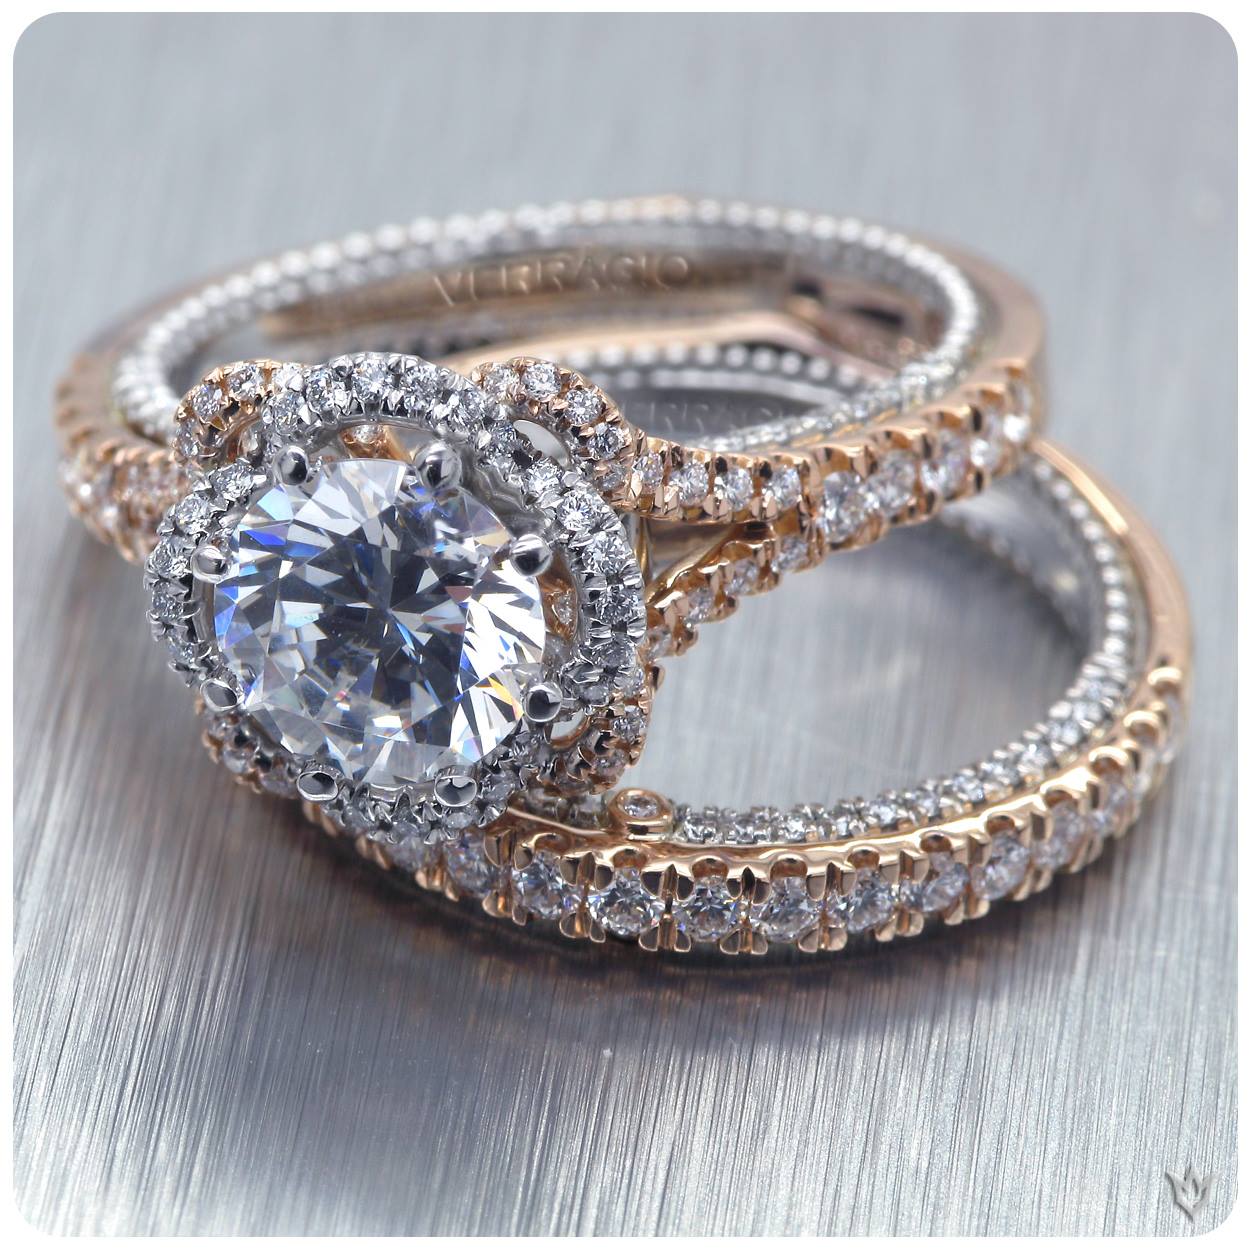 Birmingham Jewelry: Verragio Engagement Rings